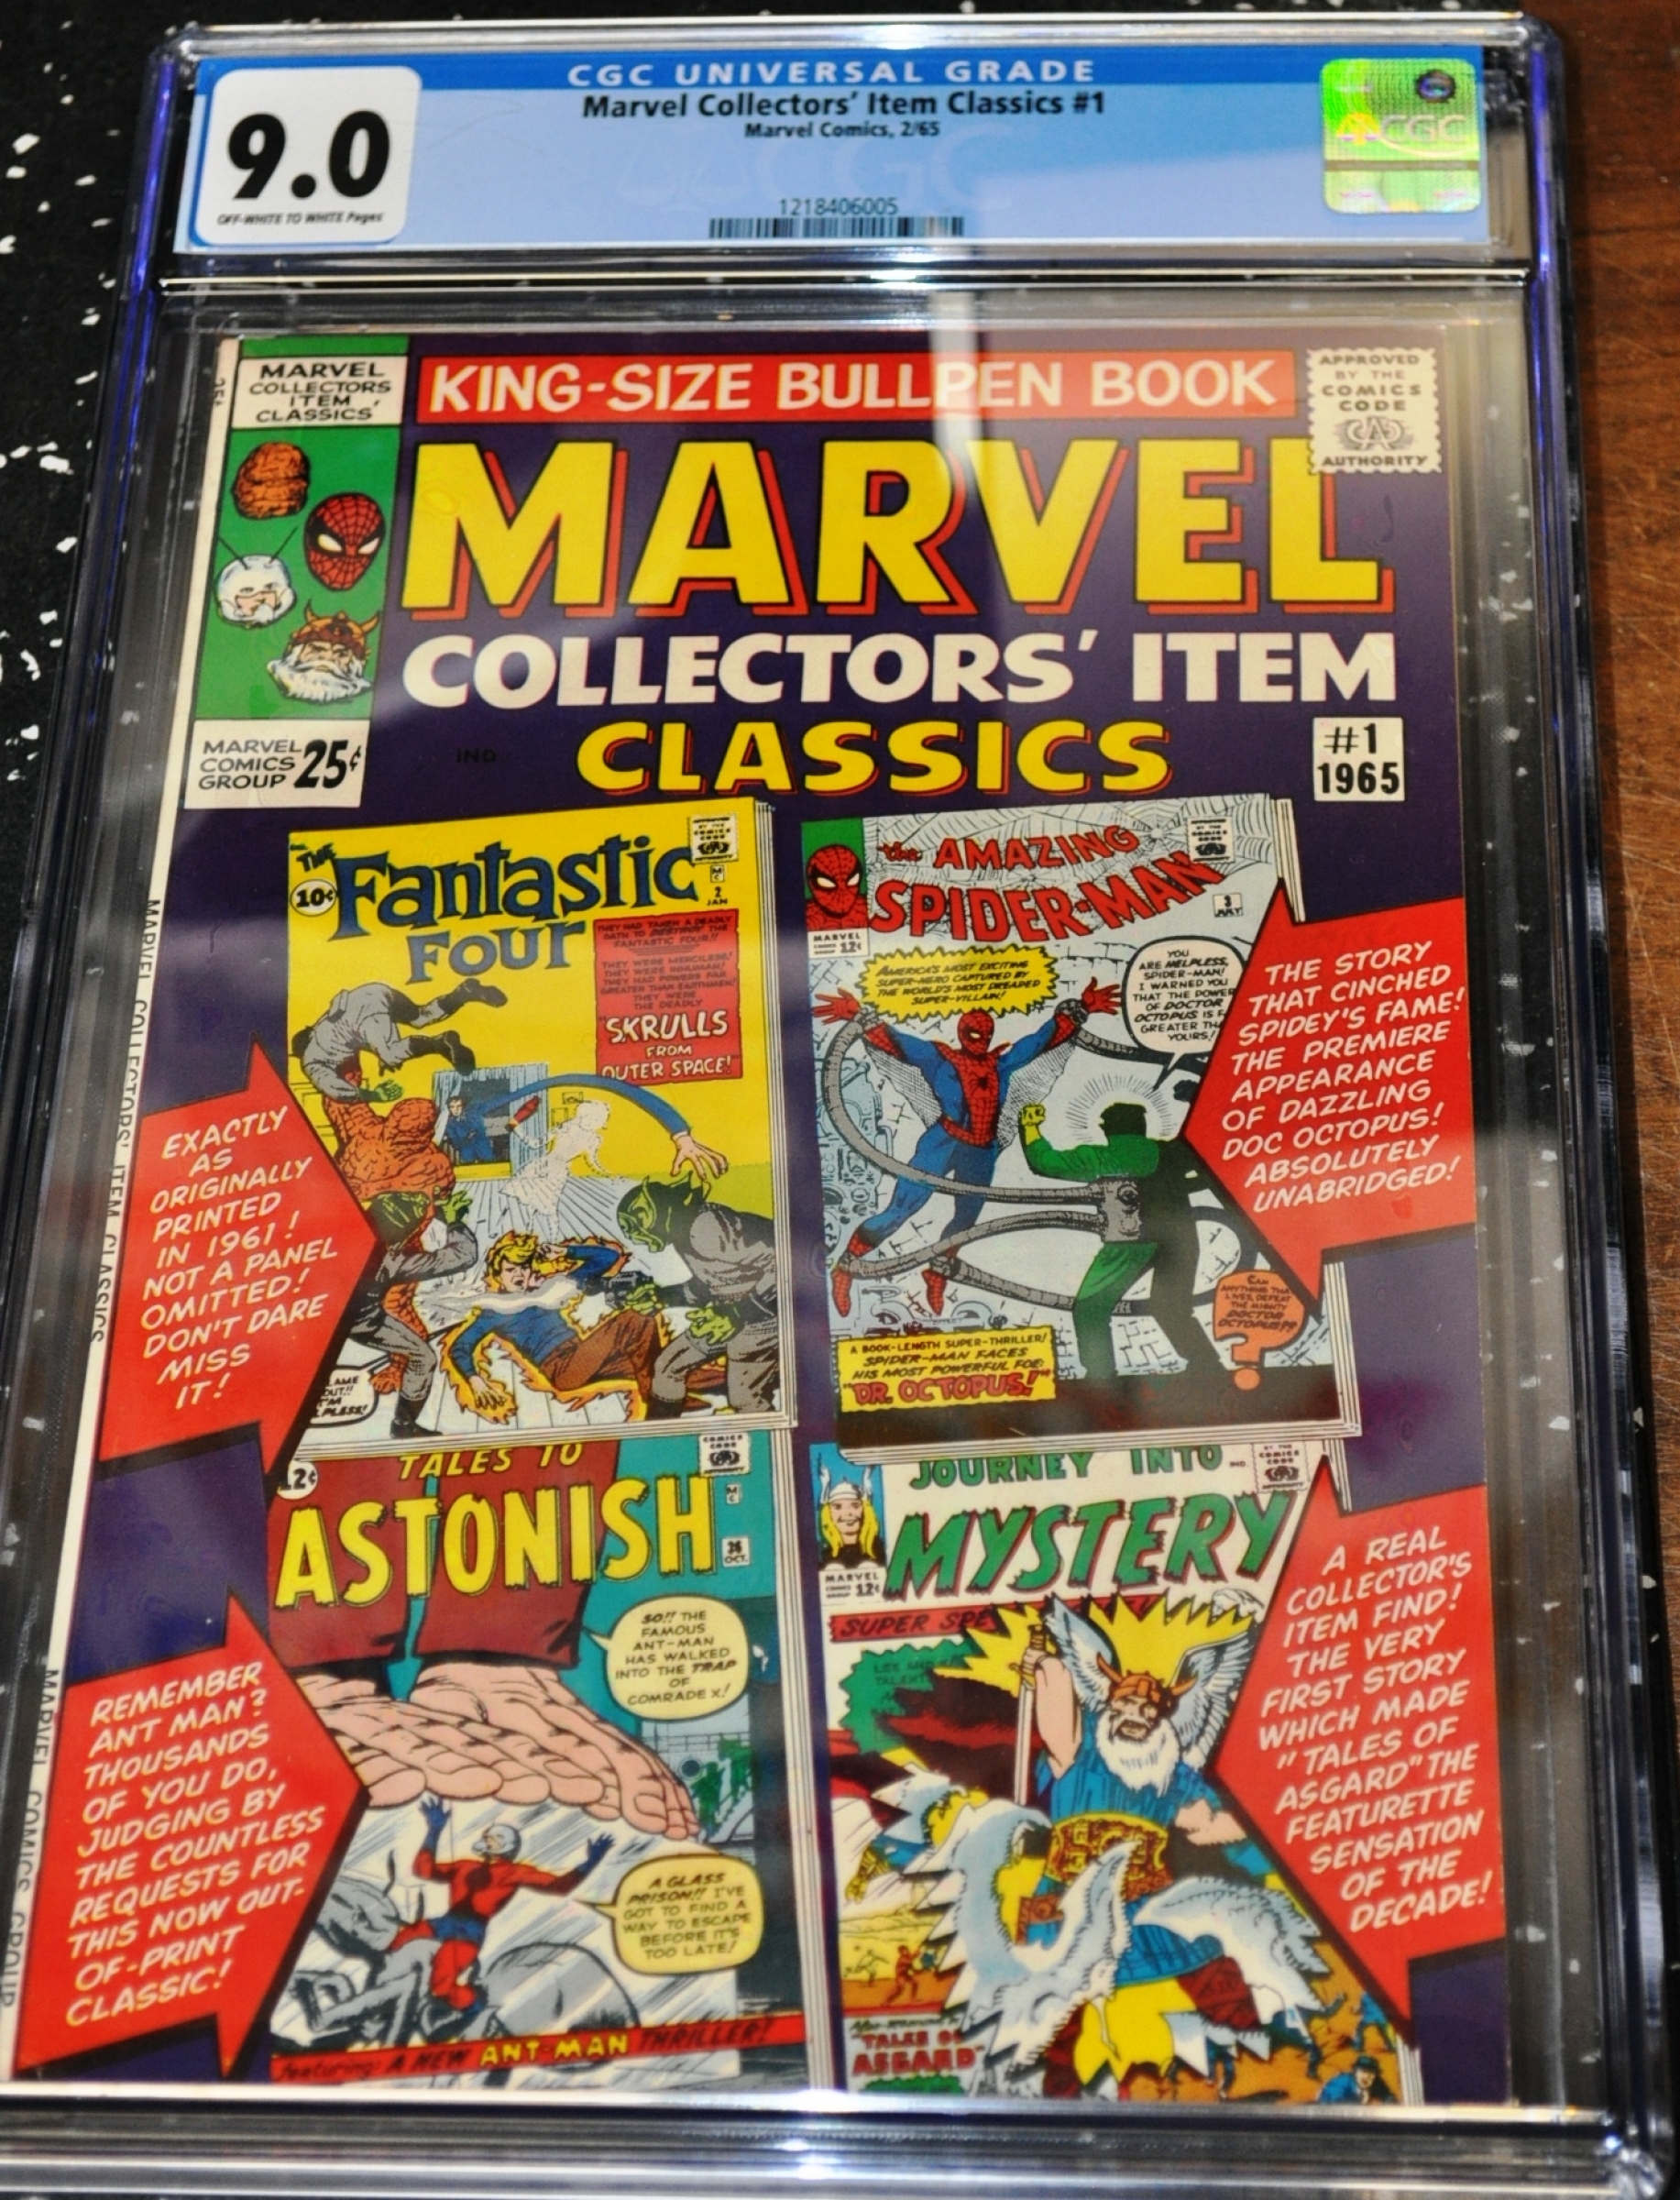 Marvel Collectors' Item Classics #1 CGC 9.0 ow/w